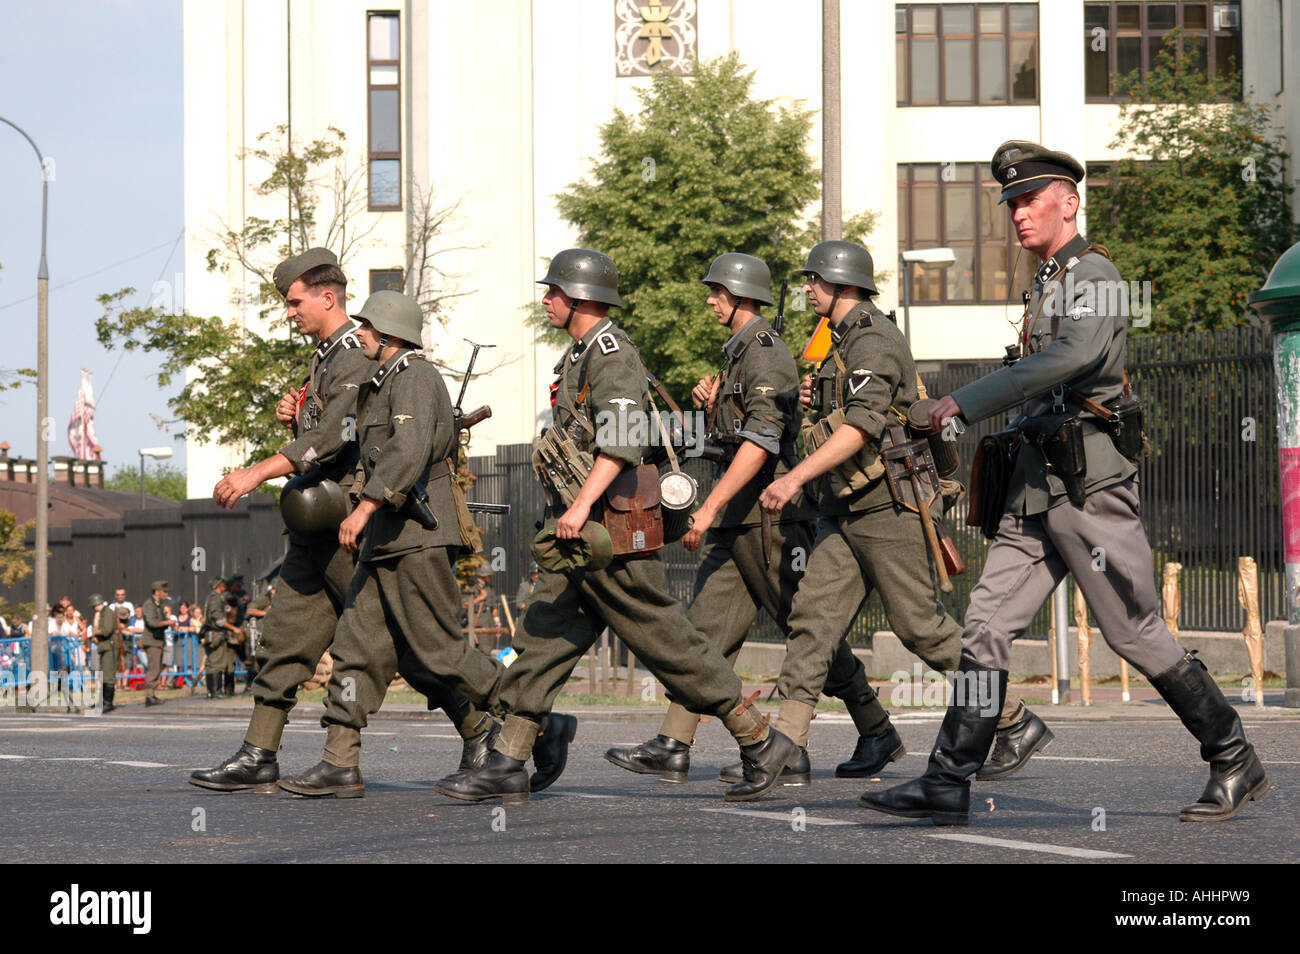 Historical reenactment of Warsaw Uprising in 1944 during II World War. German troop. Stock Photo